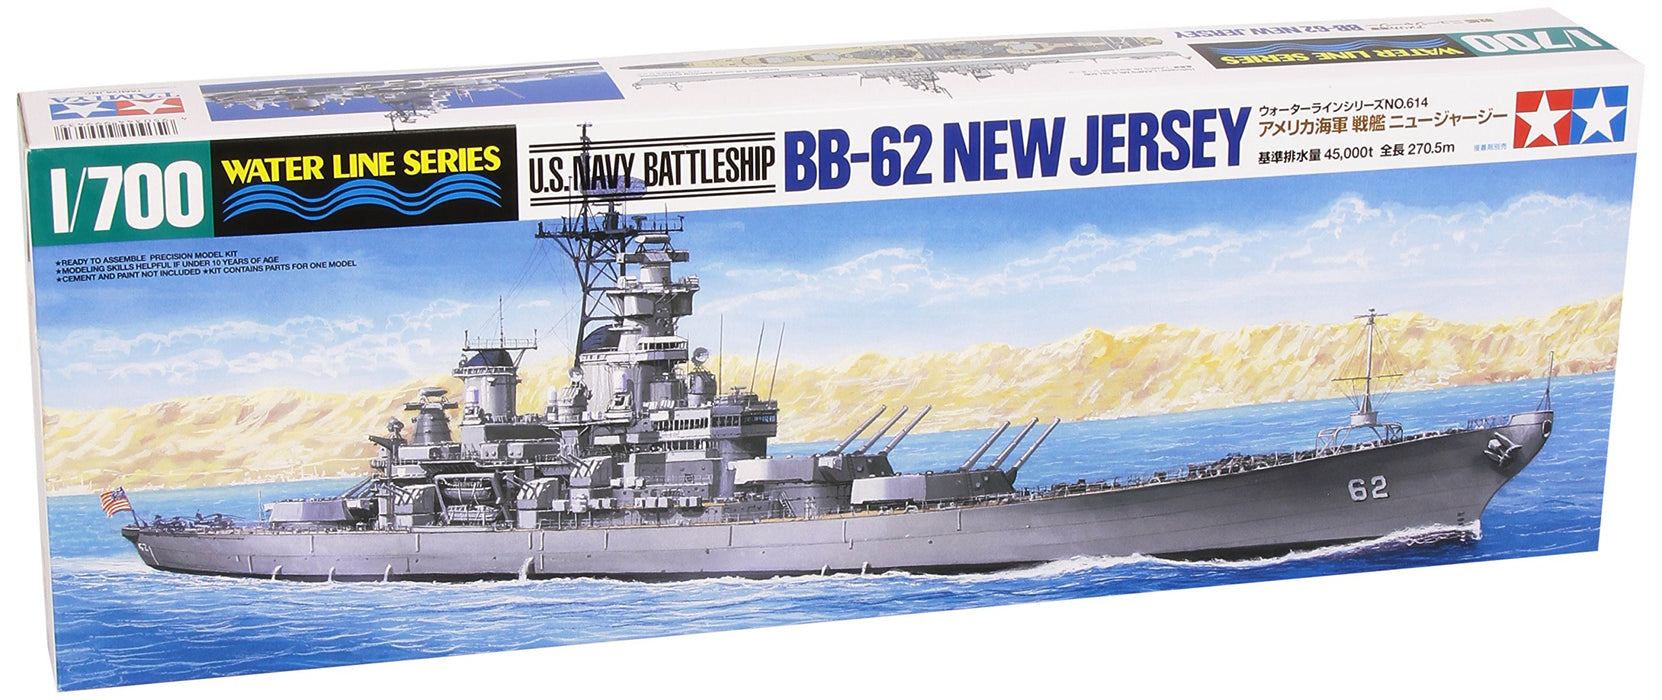 TAMIYA 31614 Us Navy Battleship Bb-62 New Jersey 1/700 Scale Kit